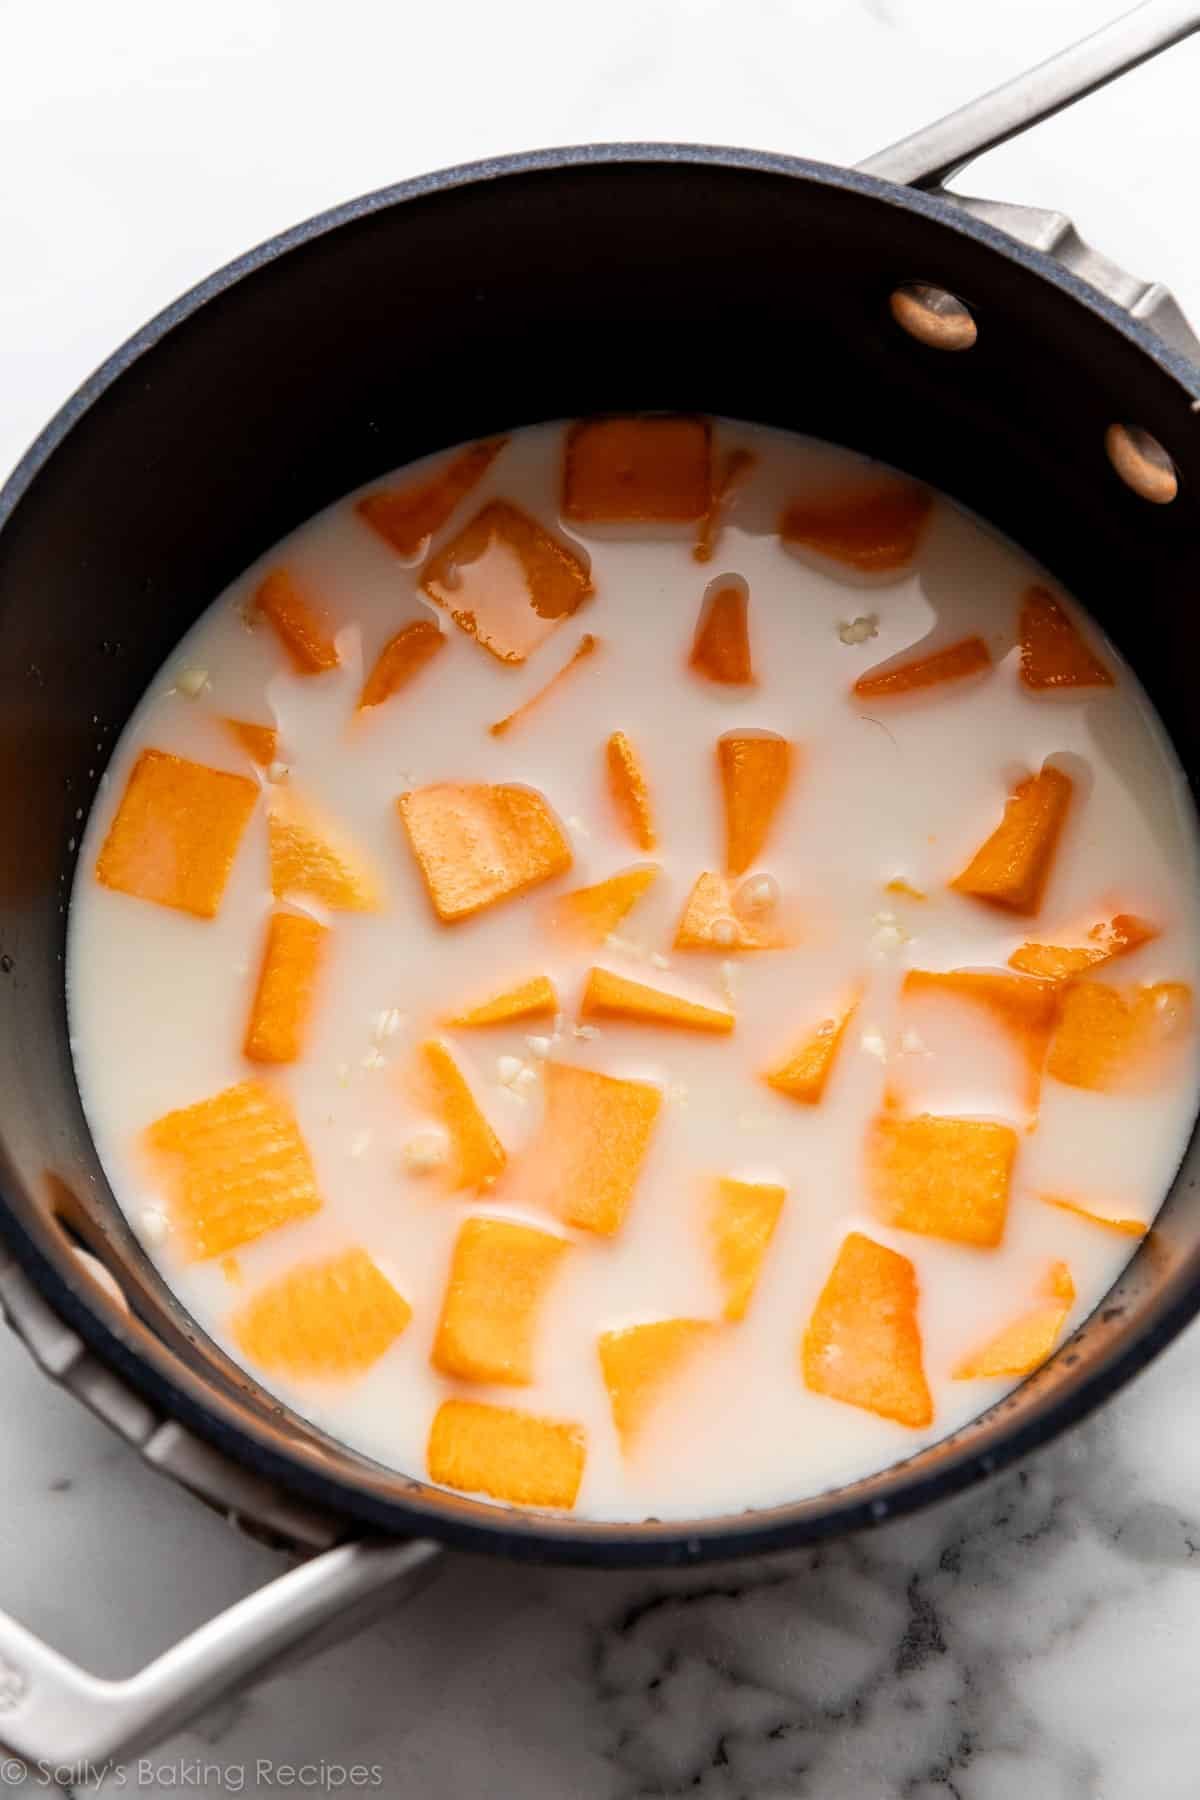 cubed squash floating in milk in saucepan.